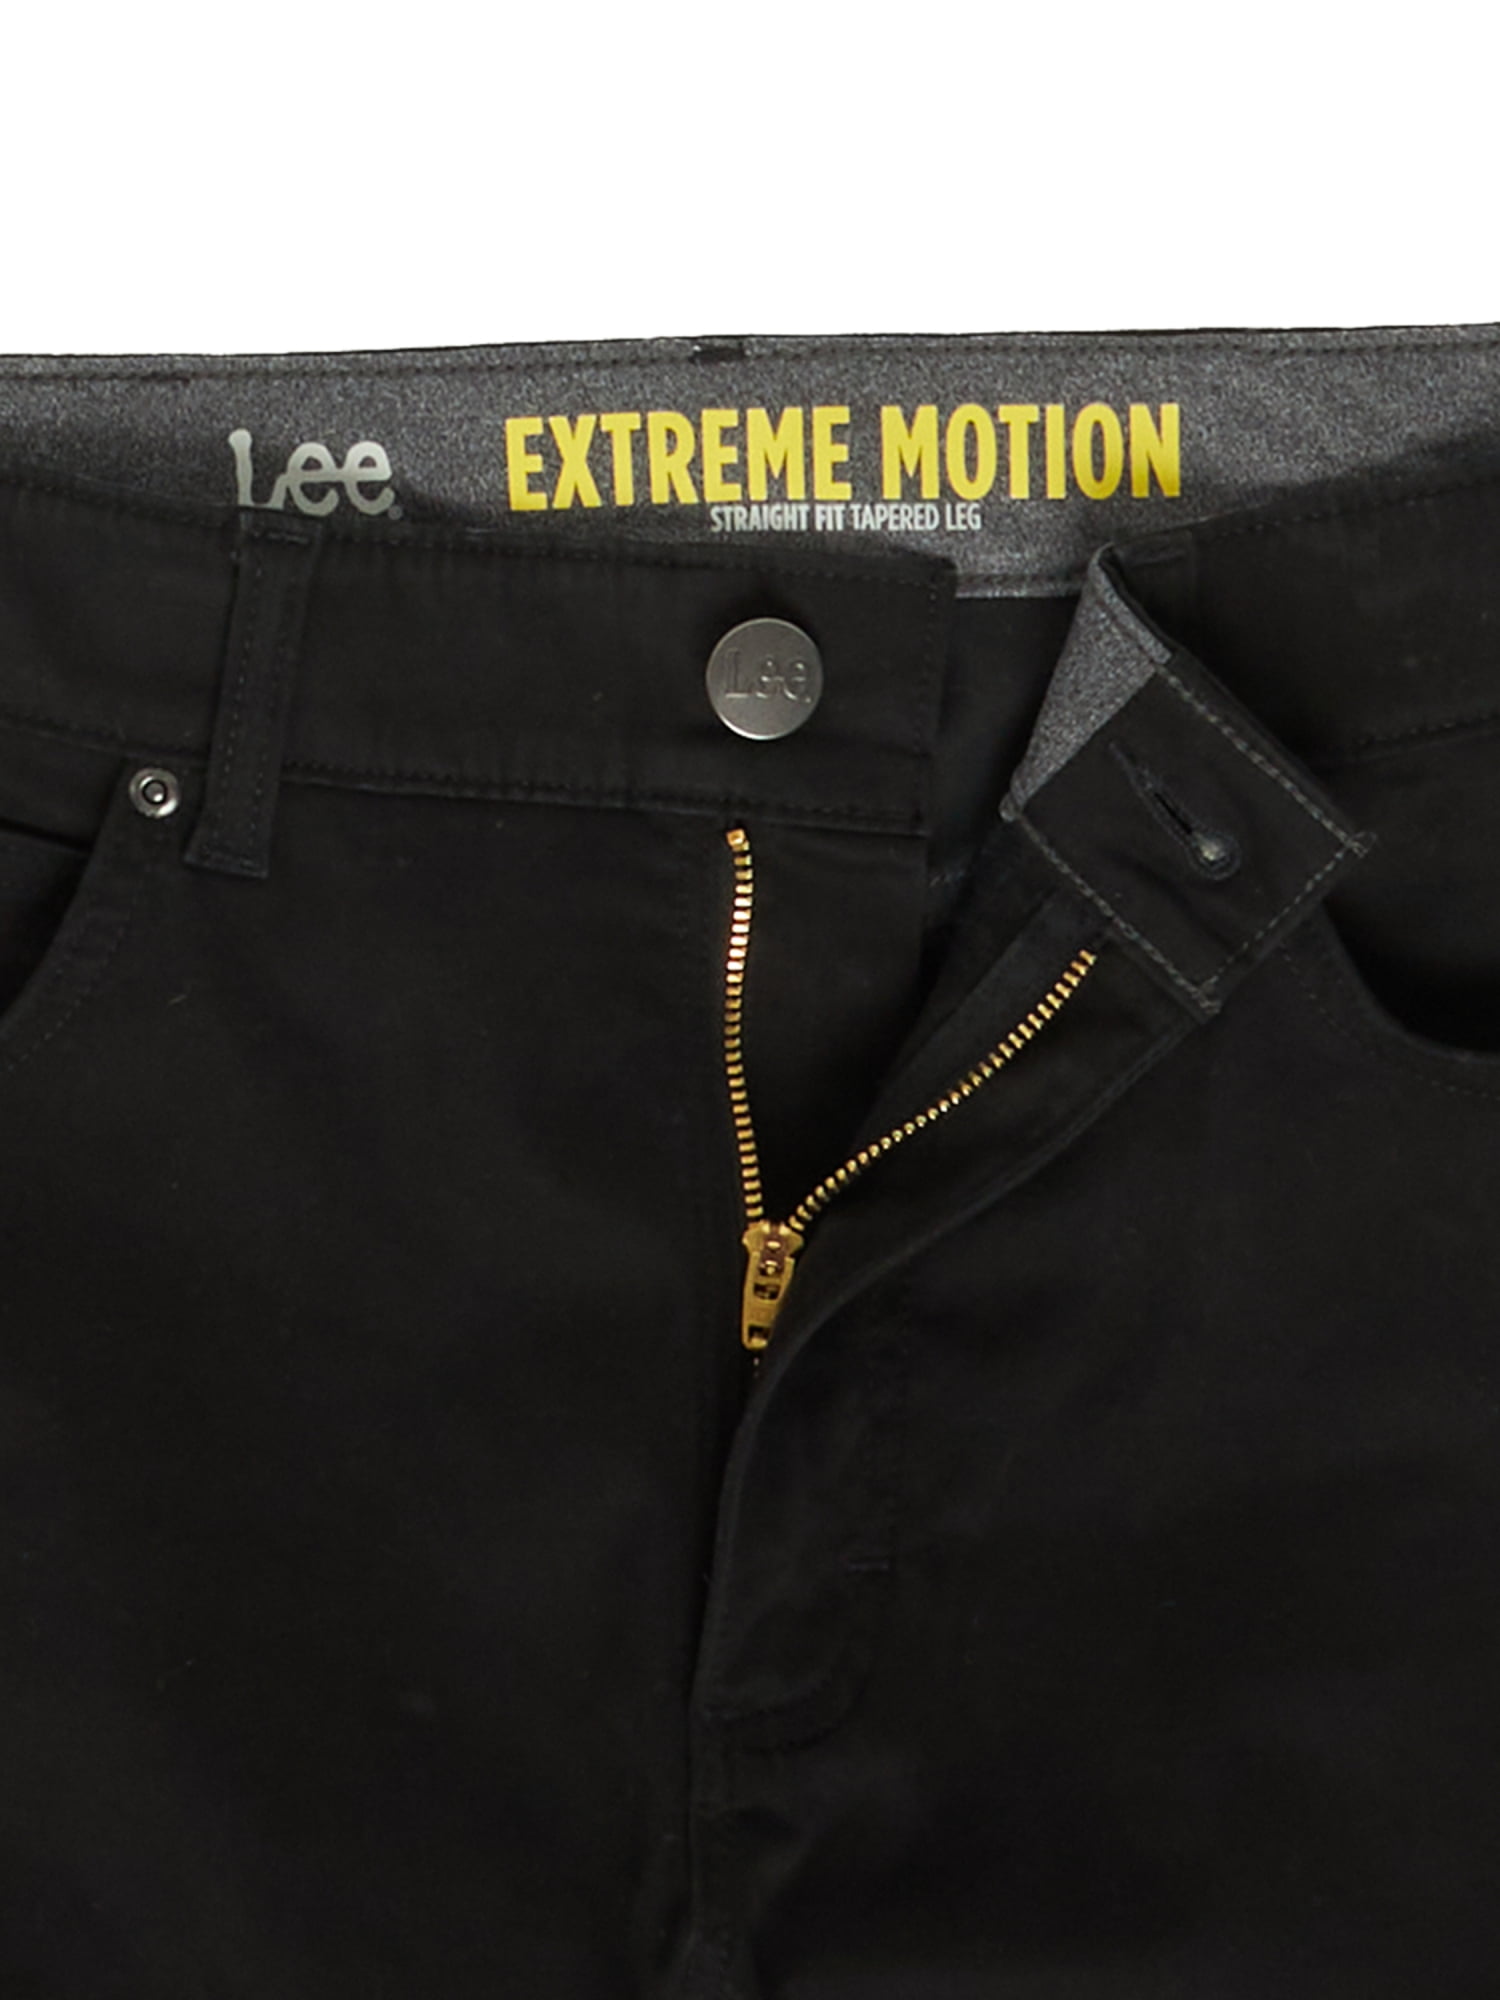 Lee Men's Extreme Motion Straight Fit 5 Pocket Pant